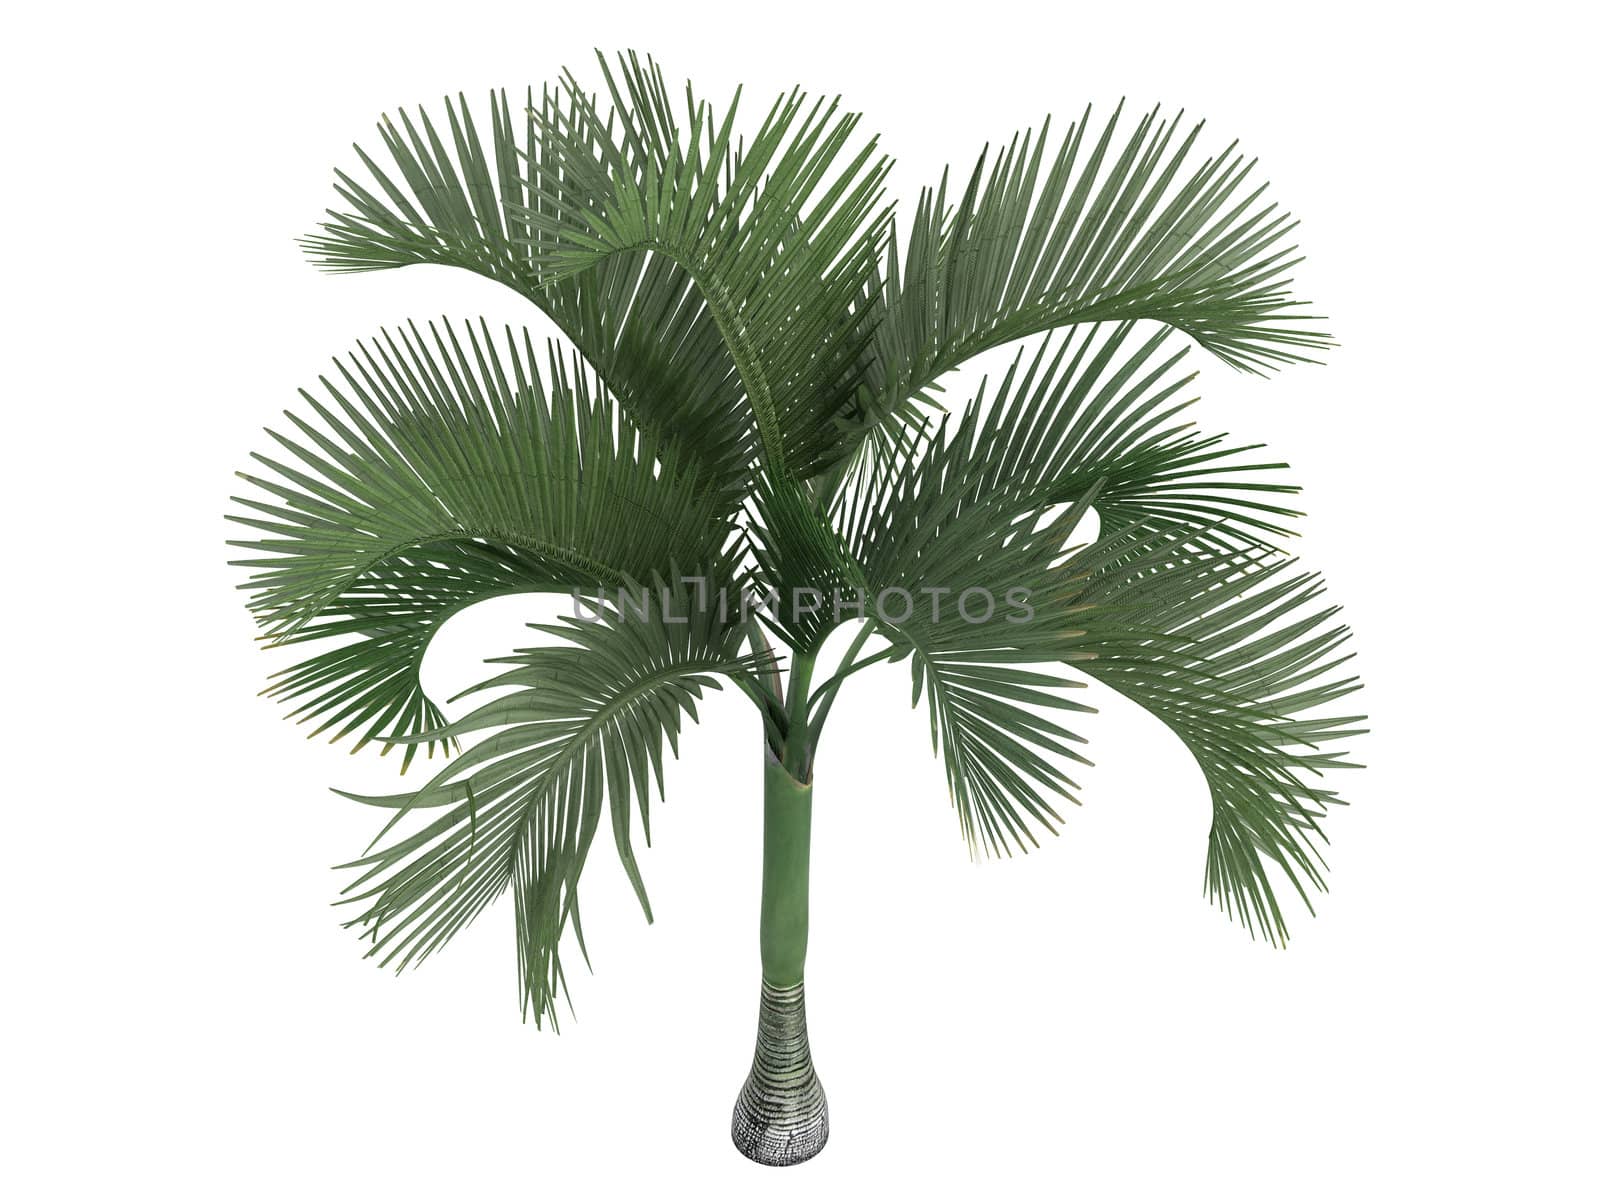 Carpoxylon Palm or Carpoxylon macrospermum by AlexanderMorozov